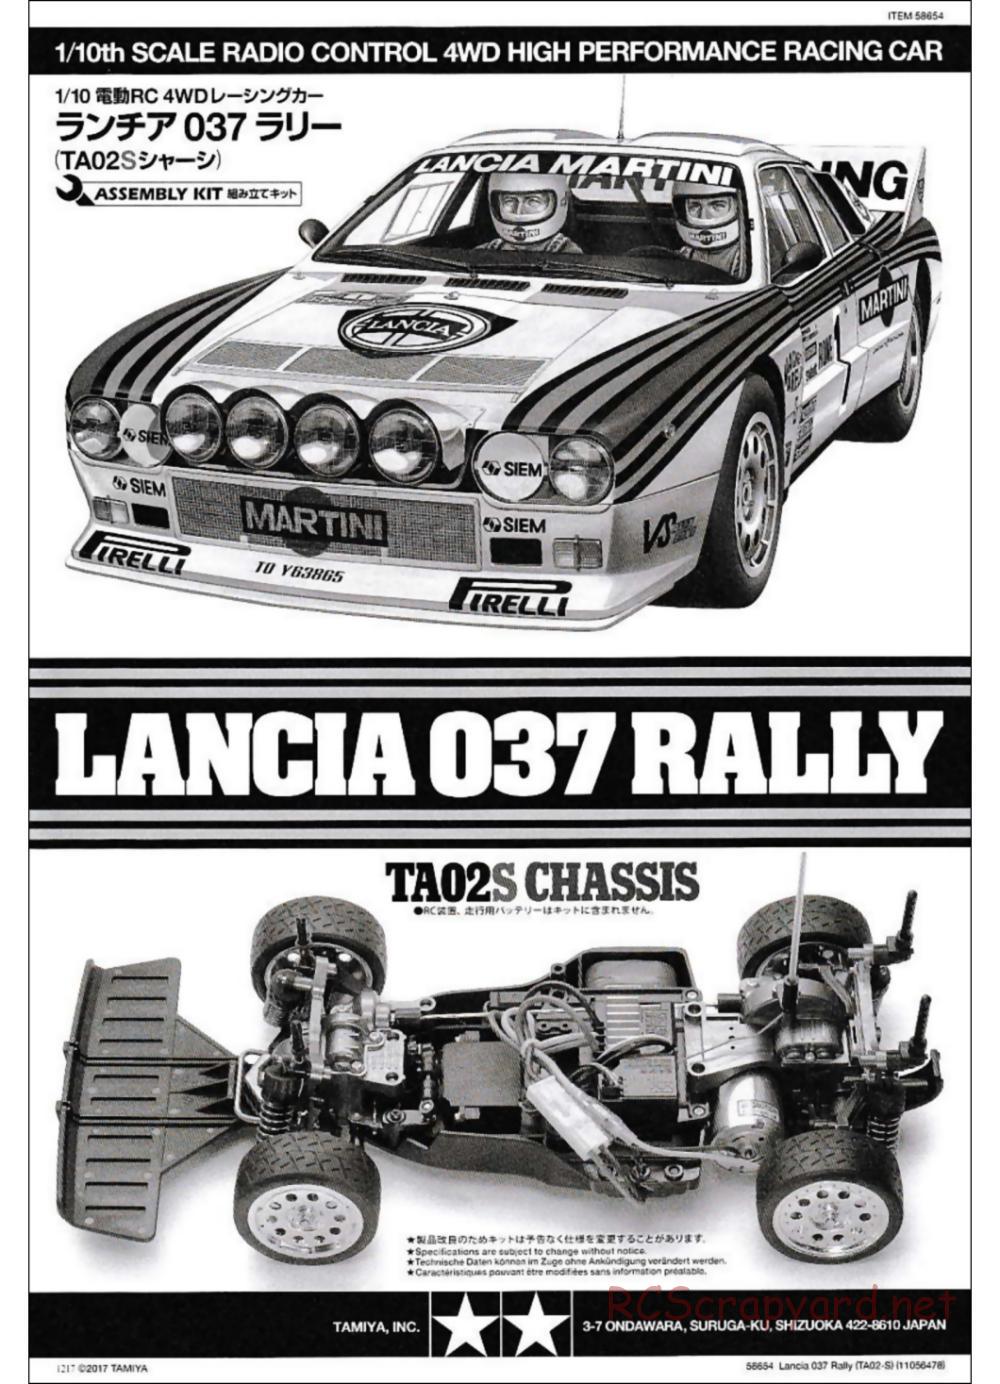 Tamiya - Lancia 037 Rally Chassis - Manual - Page 1